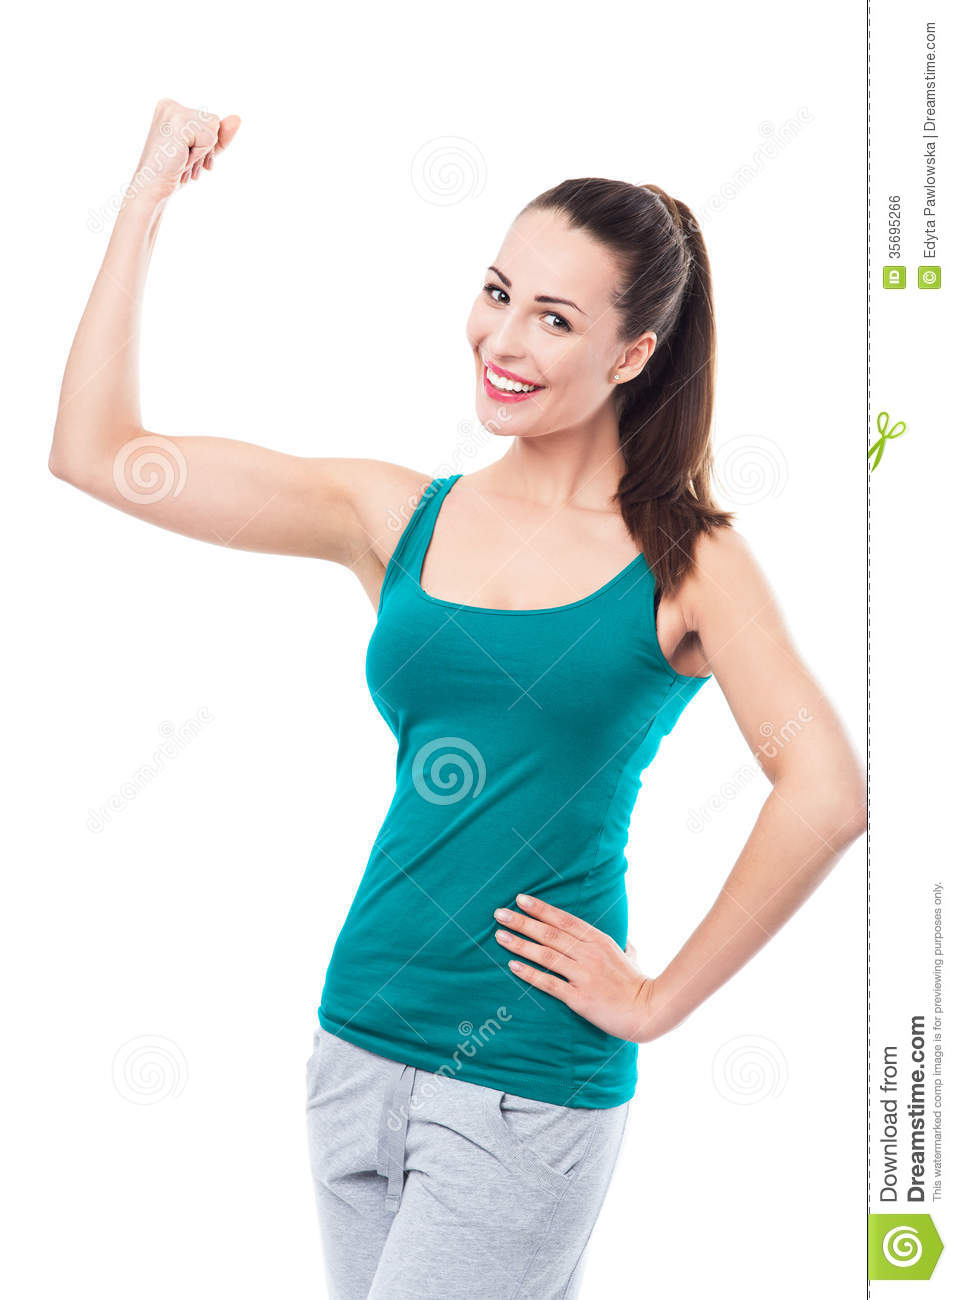 Woman Flexing Biceps Royalty Free Stock Image   Image  35695266